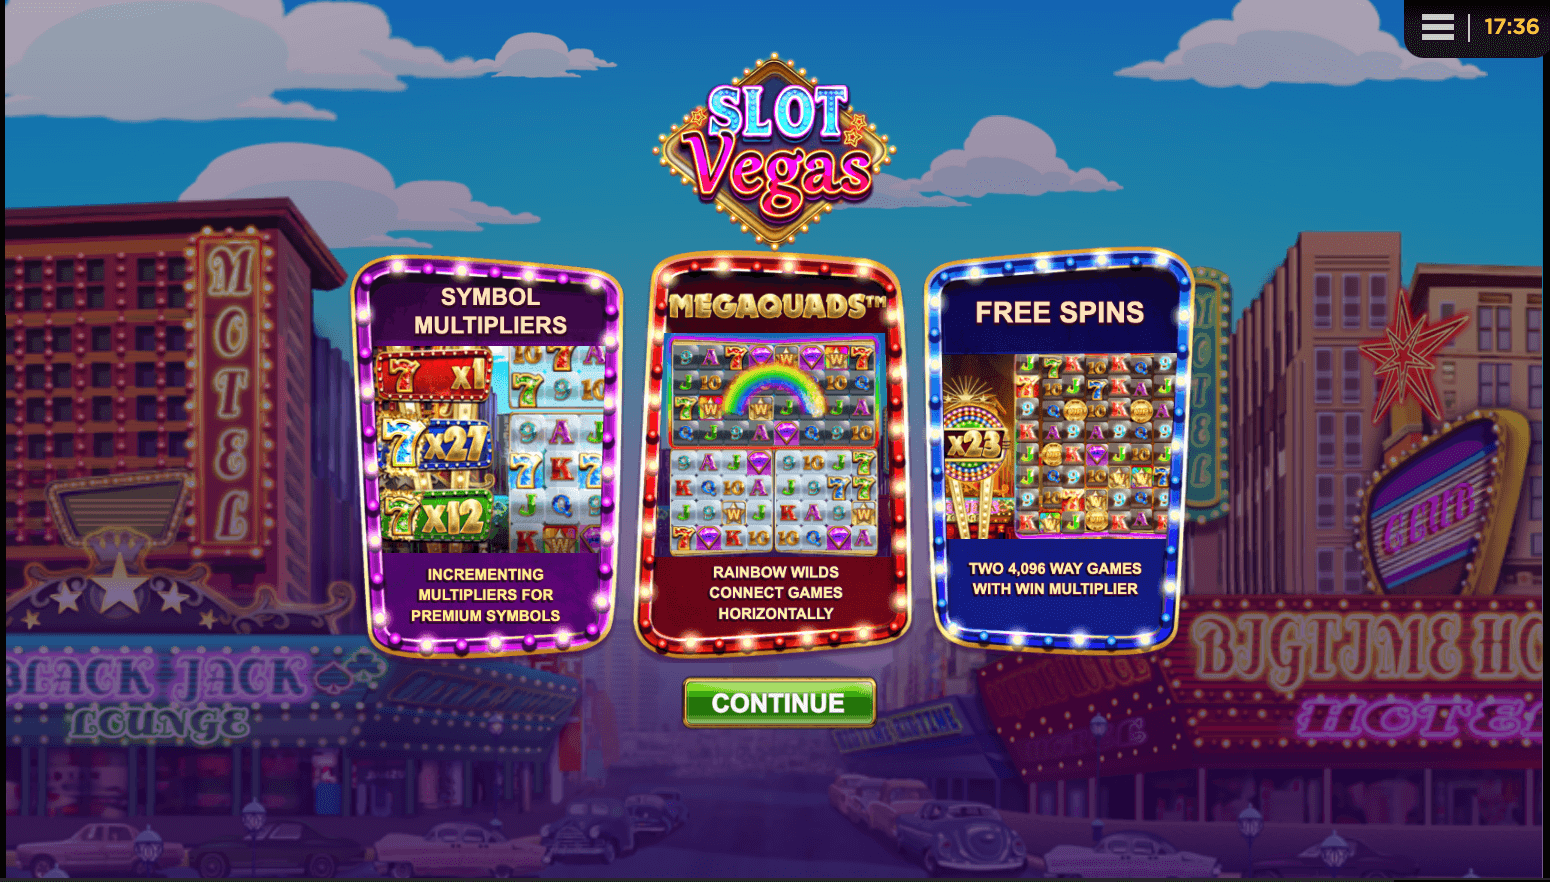 Slot Vegas Megaquads Ігровий процес